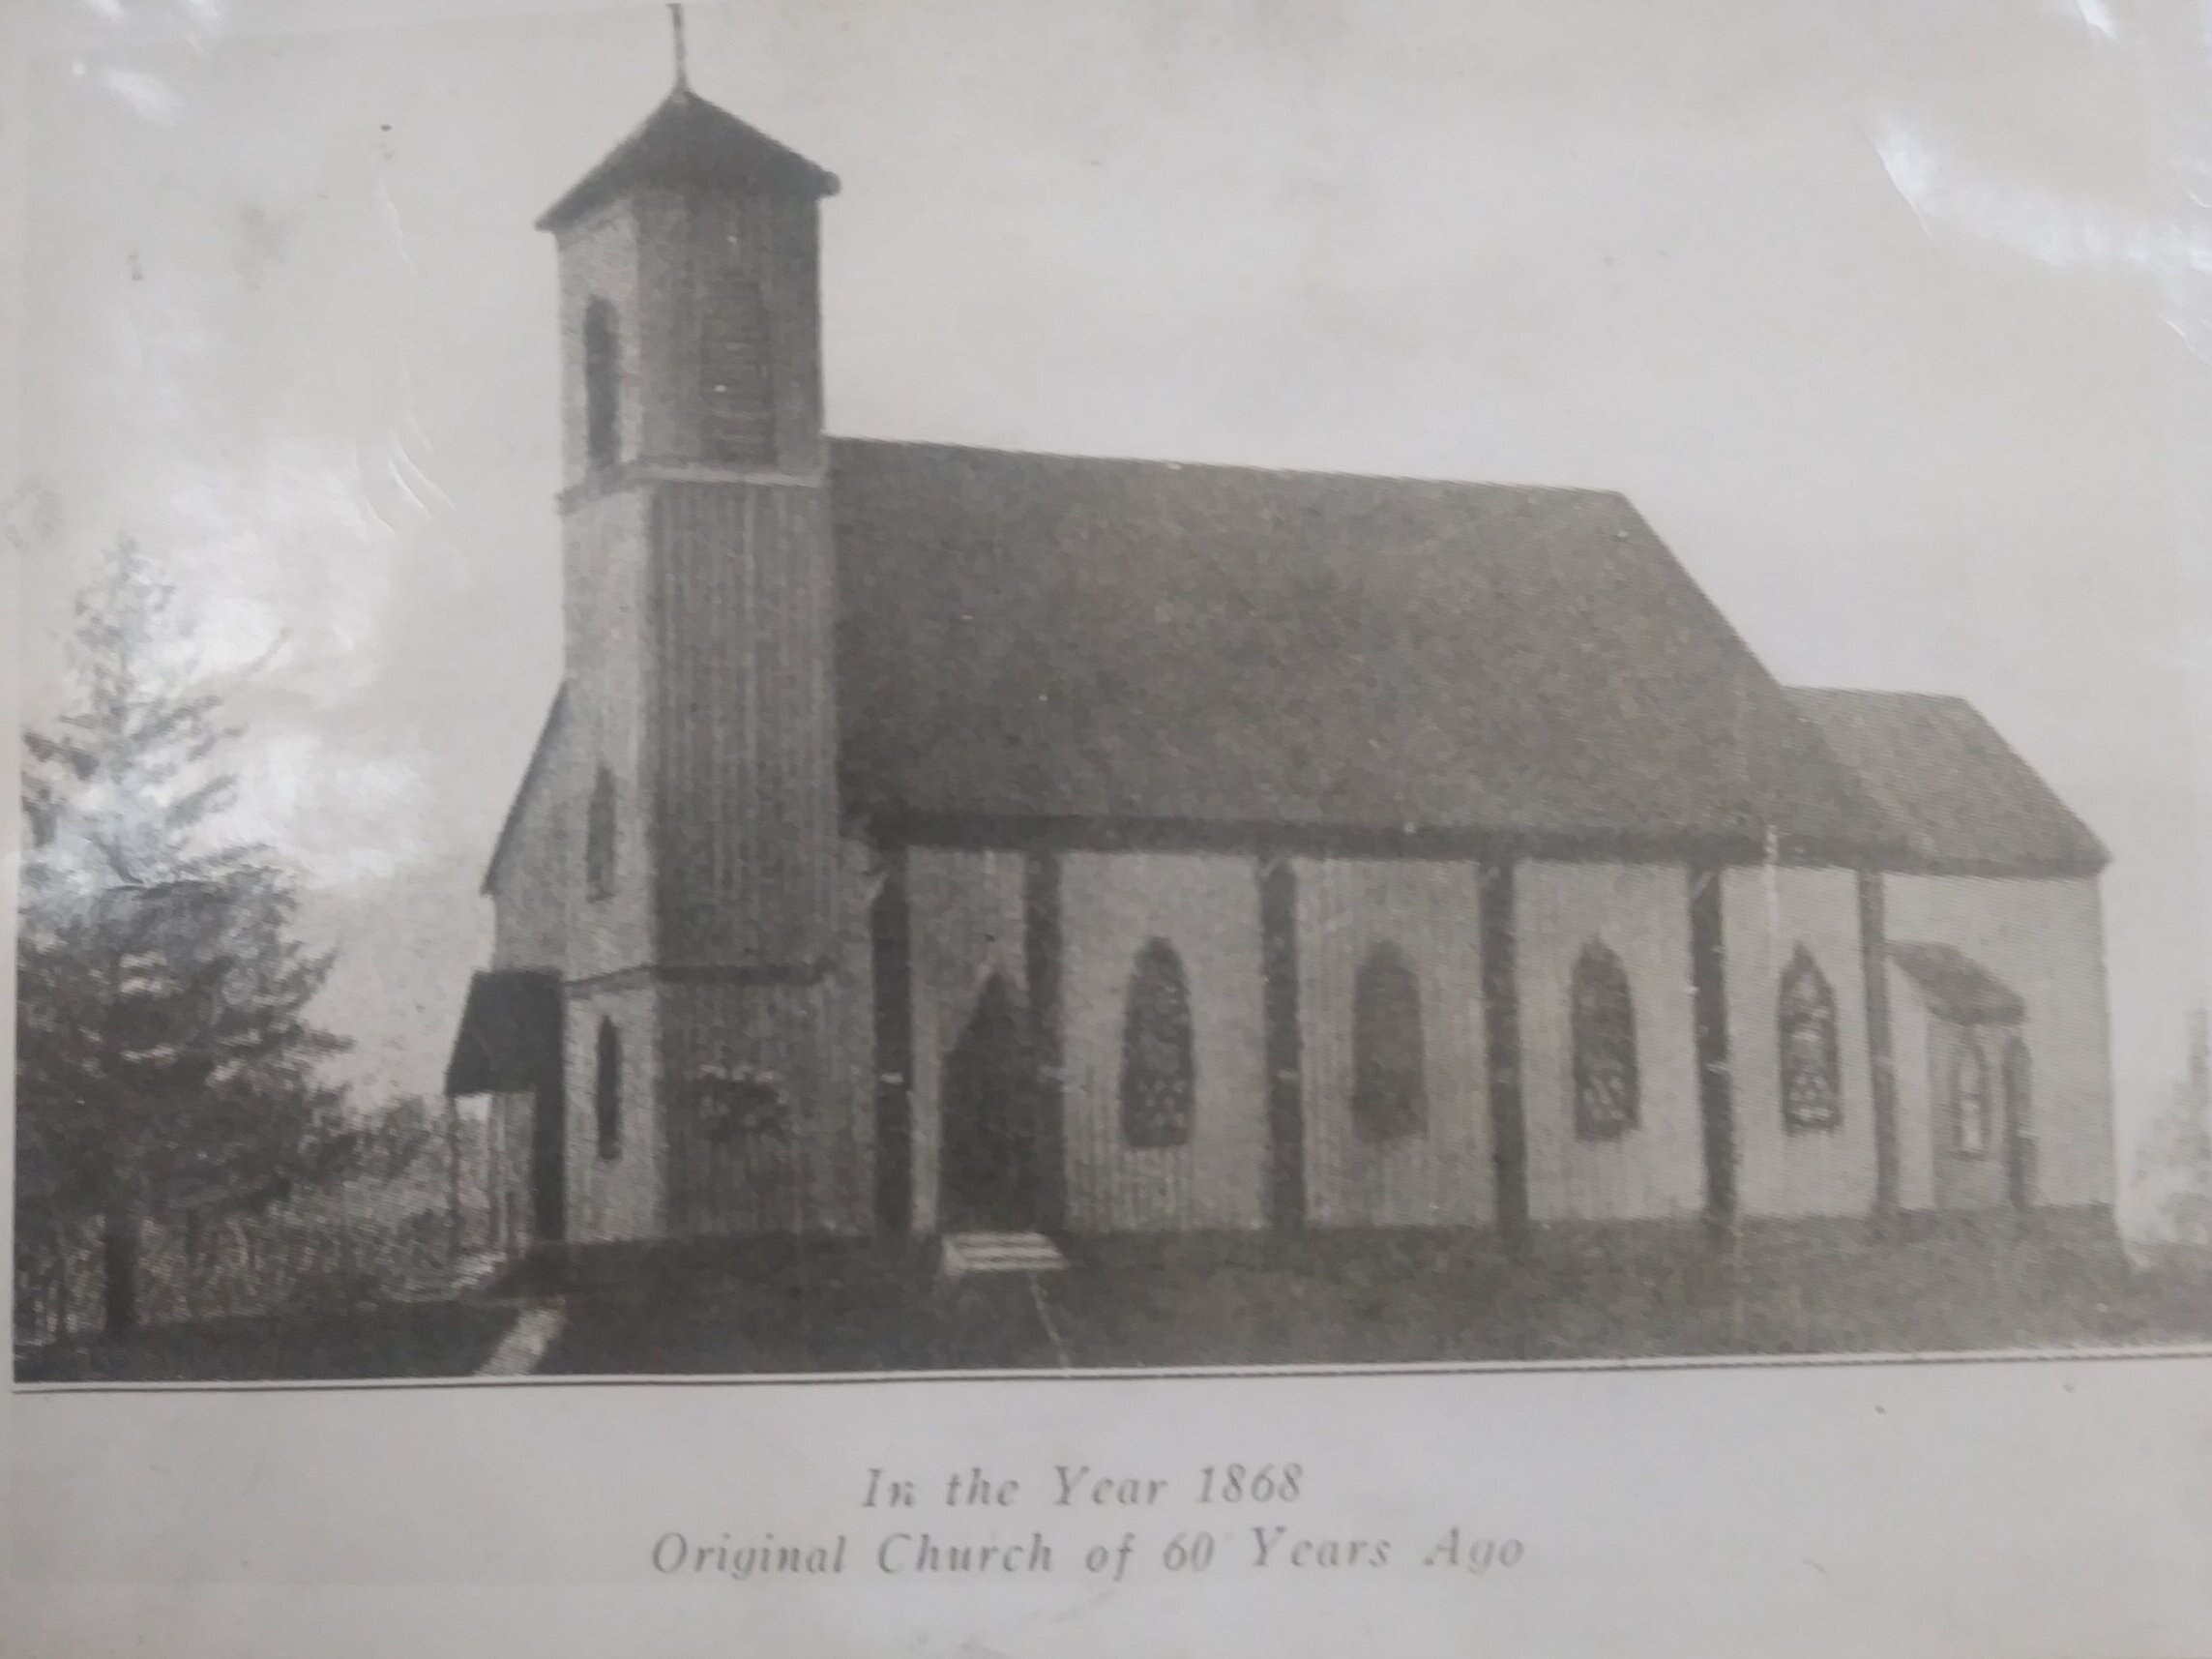  The Original St. Luke’s Church 